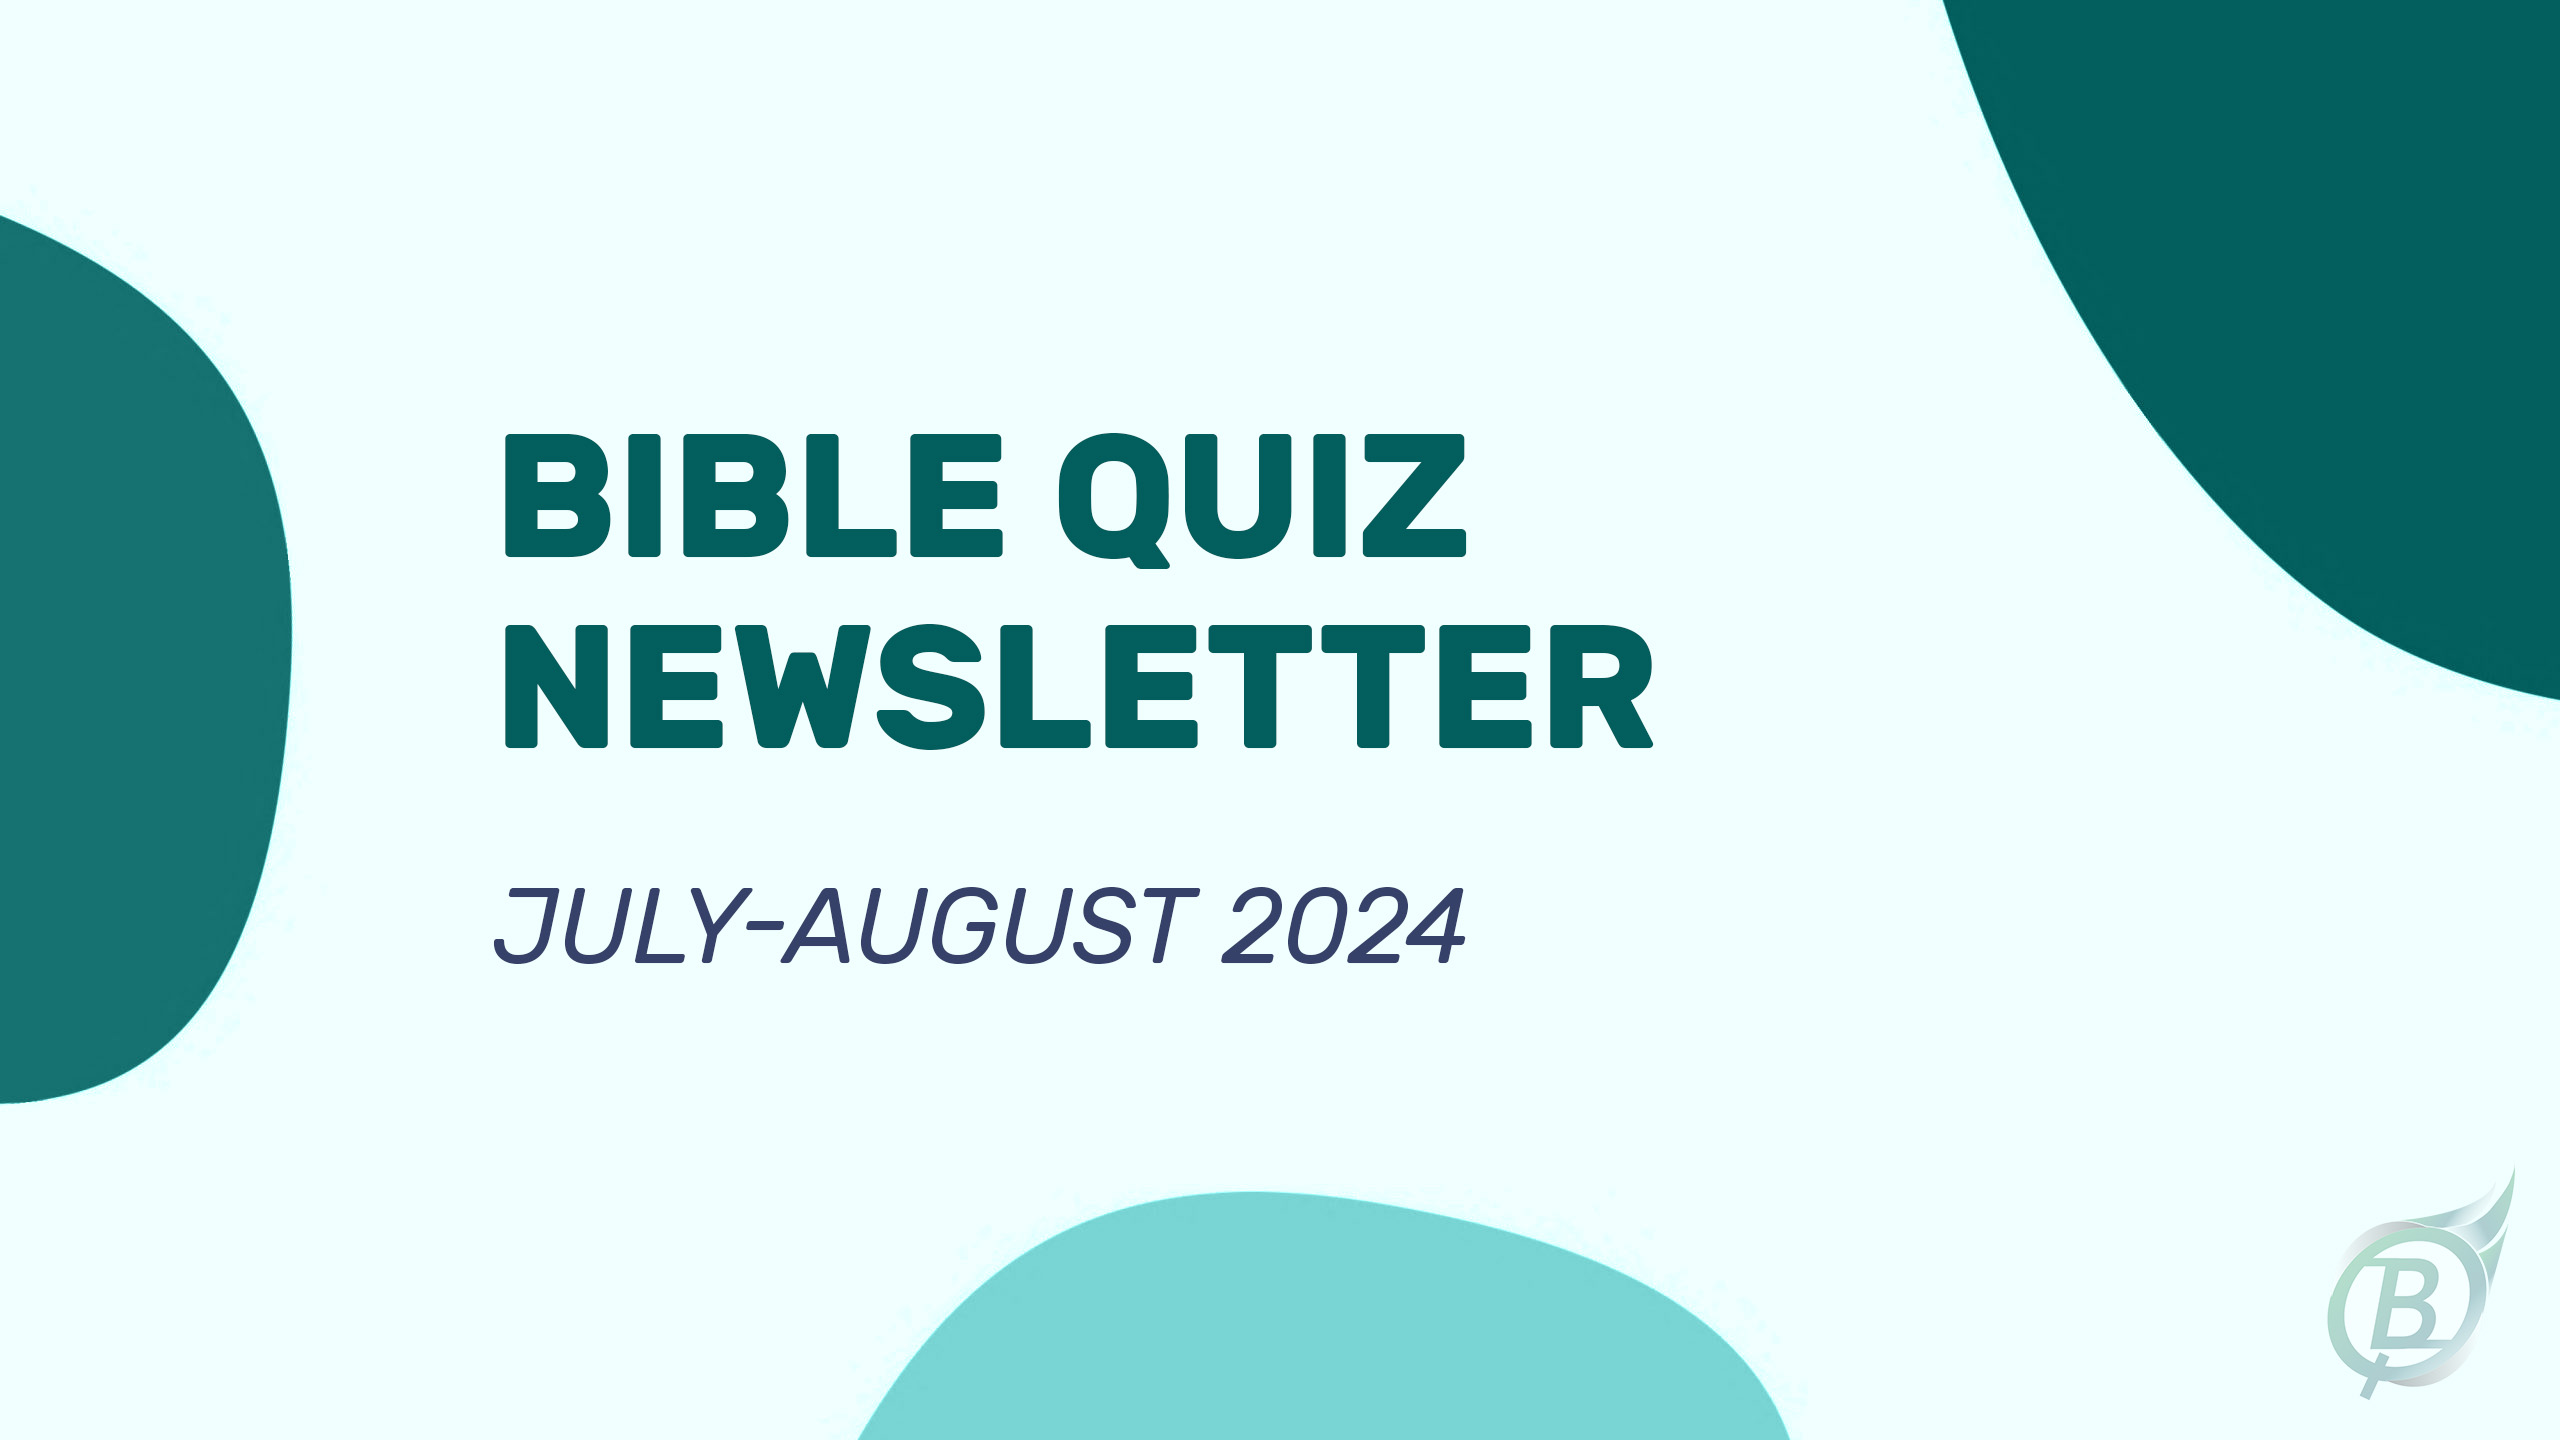 Teen Bible Quiz Newsletter - July-August 2024